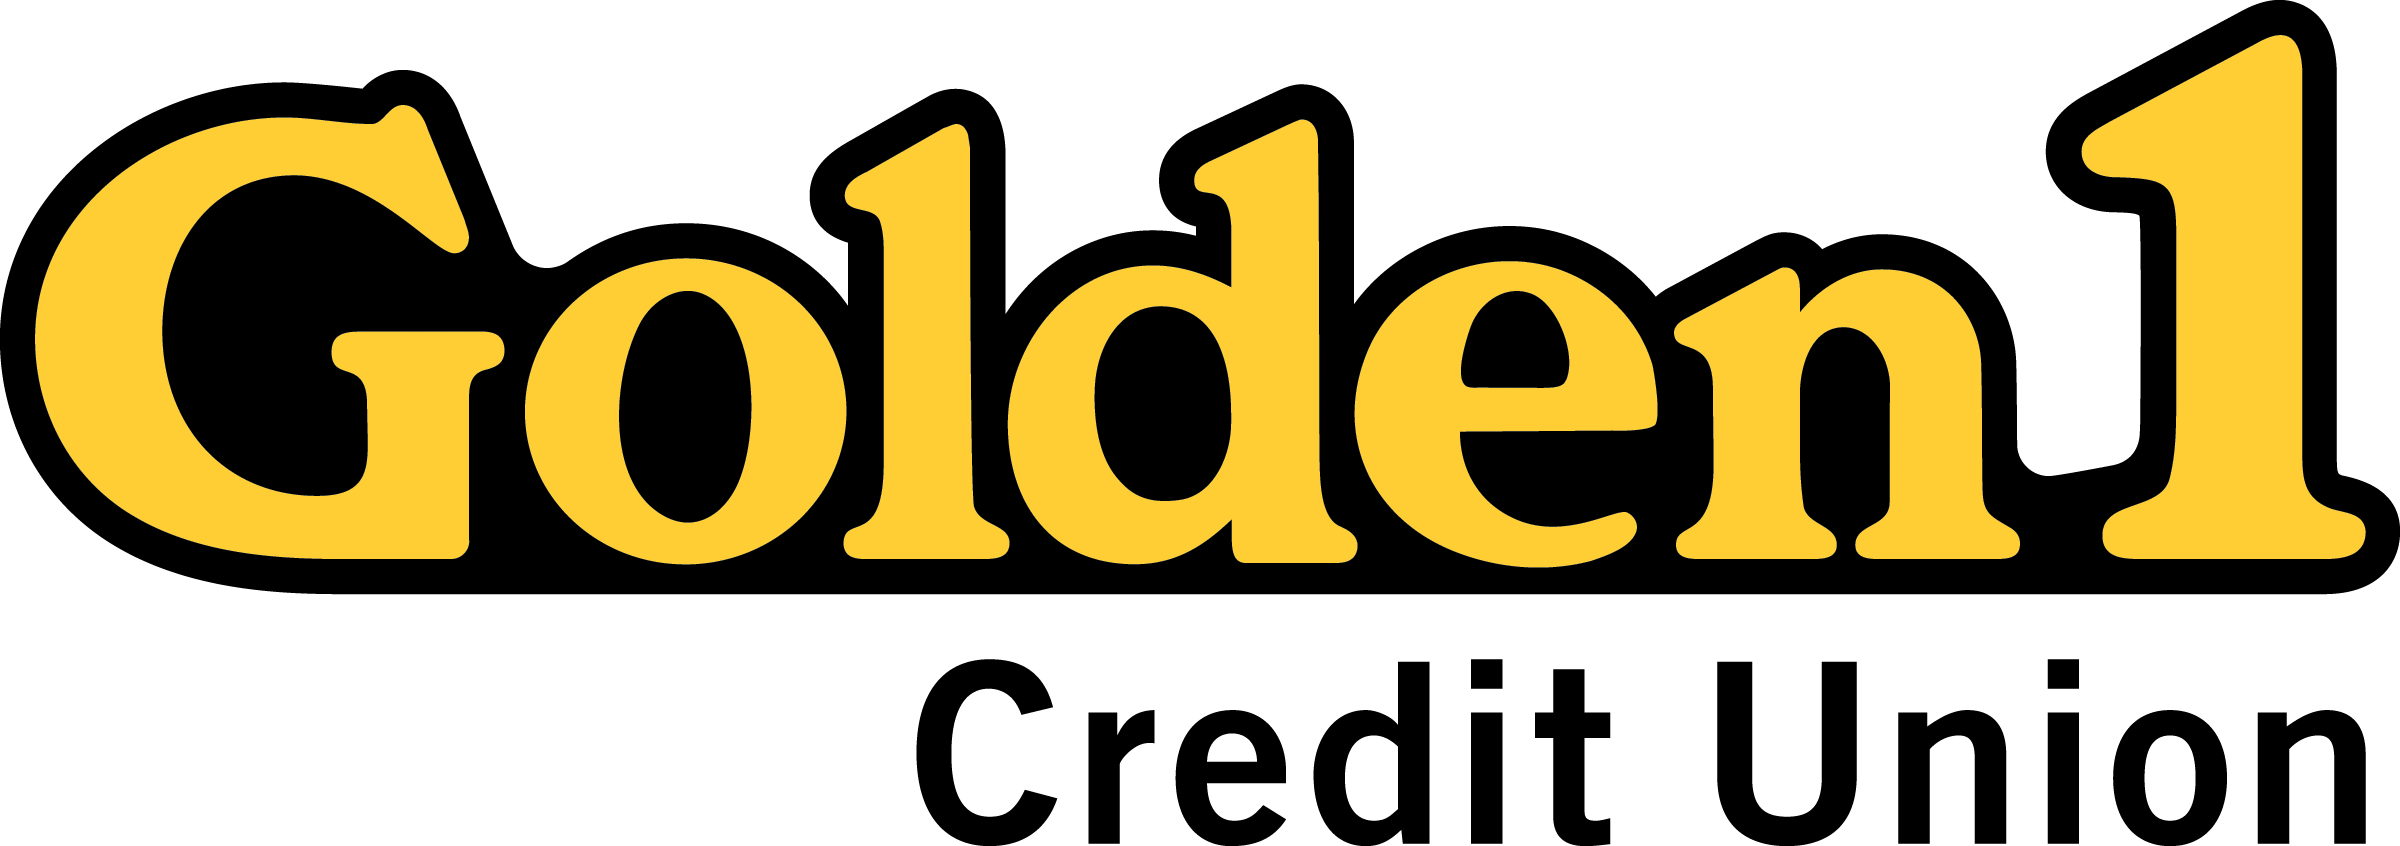 Golden1 Credit Union